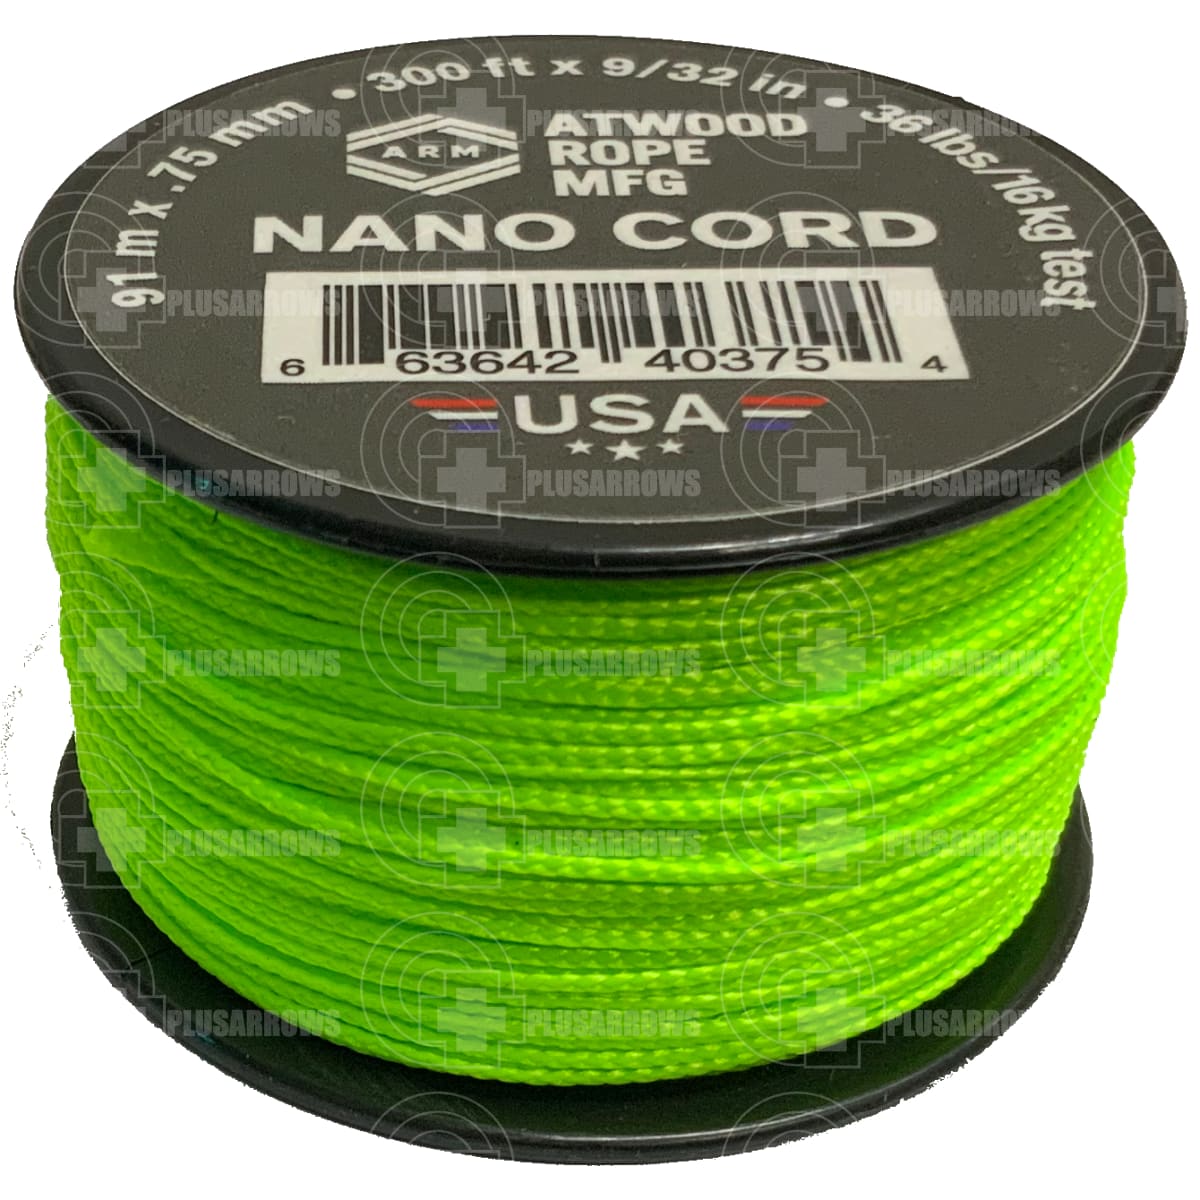 Atwood Nano Cord (300 Feet)